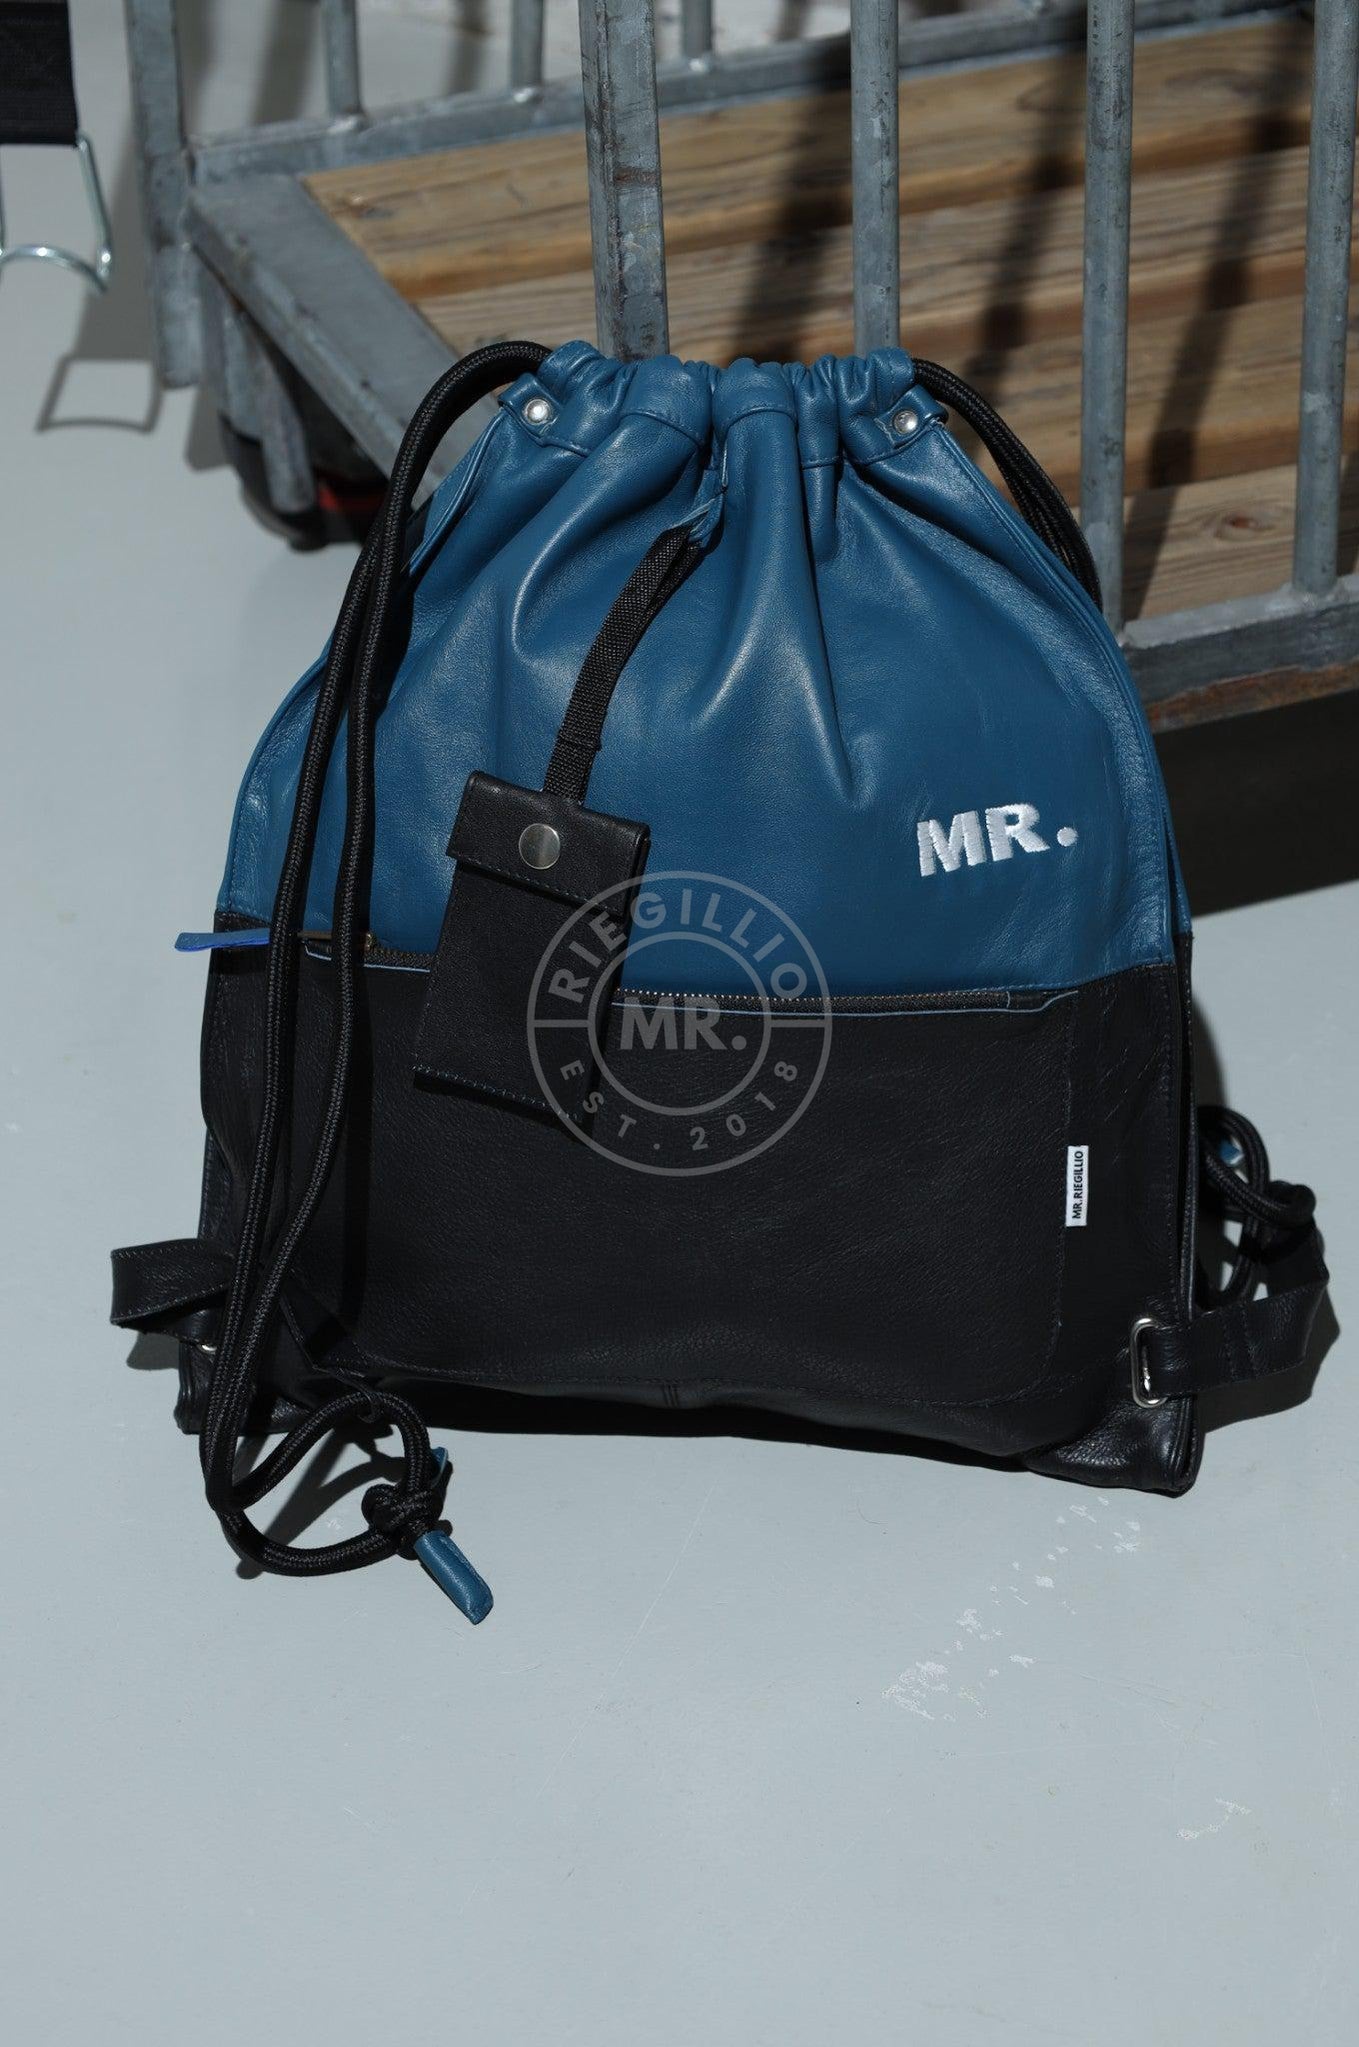 Leather Backpack Black - Blue at MR. Riegillio